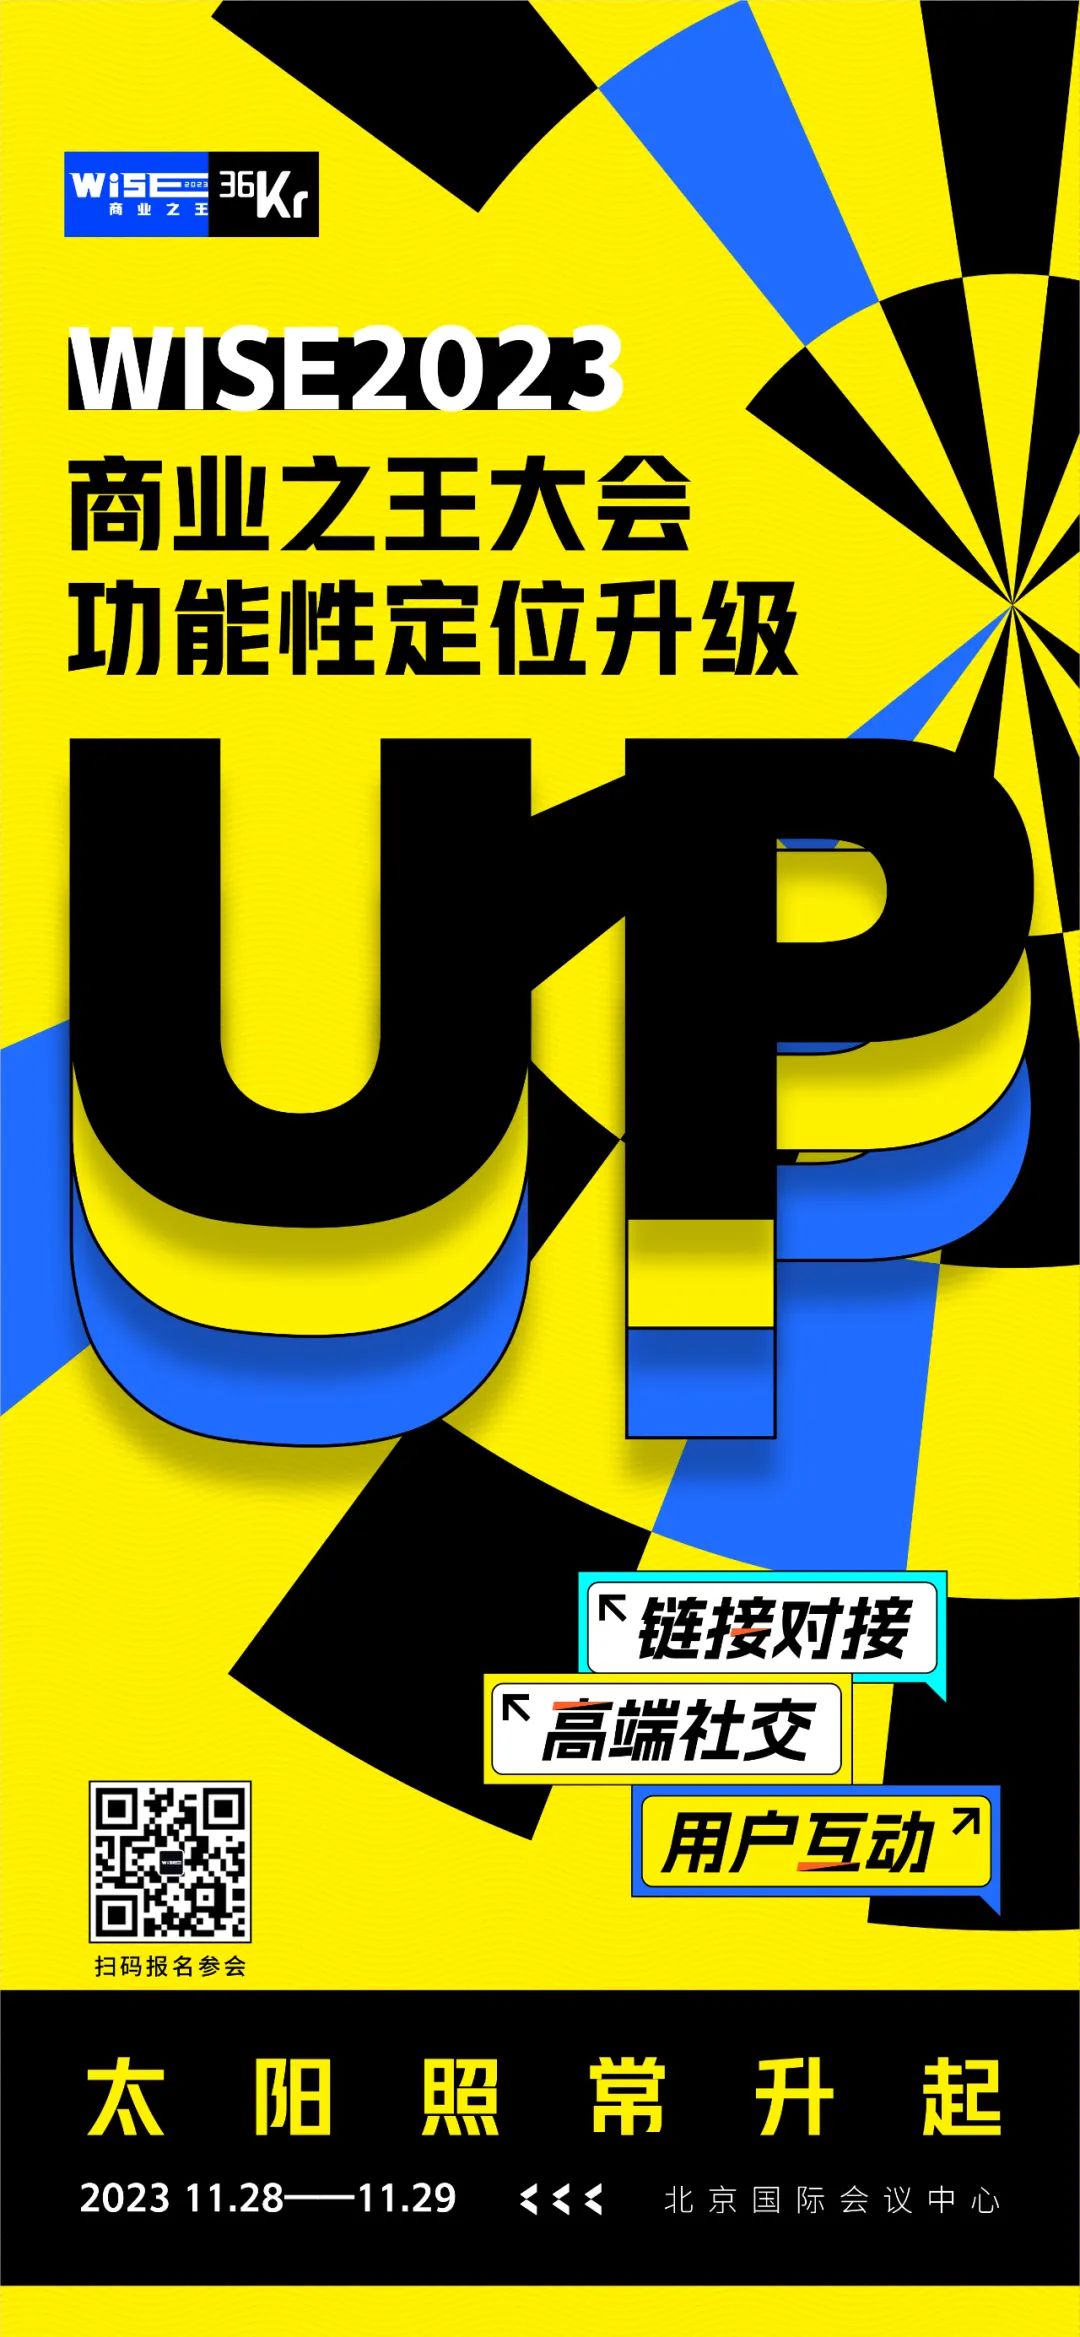 Up Up Up！ WISE2023 商业之王迎来功能性定位升级！-36氪